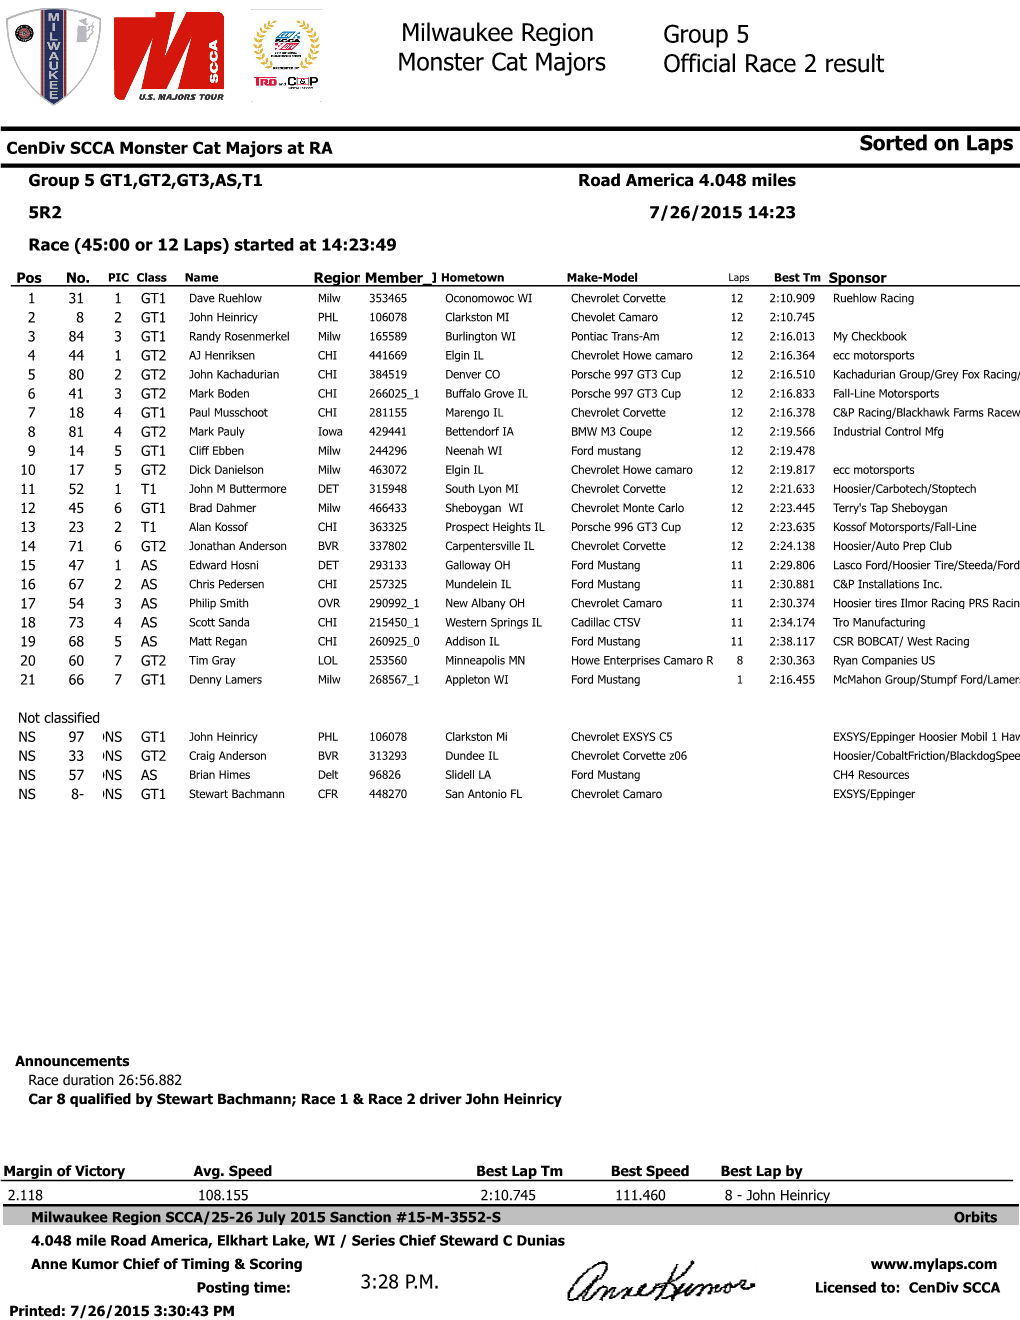 Milwaukee Region Monster Cat Majors Group 5 Official Race 2 Result